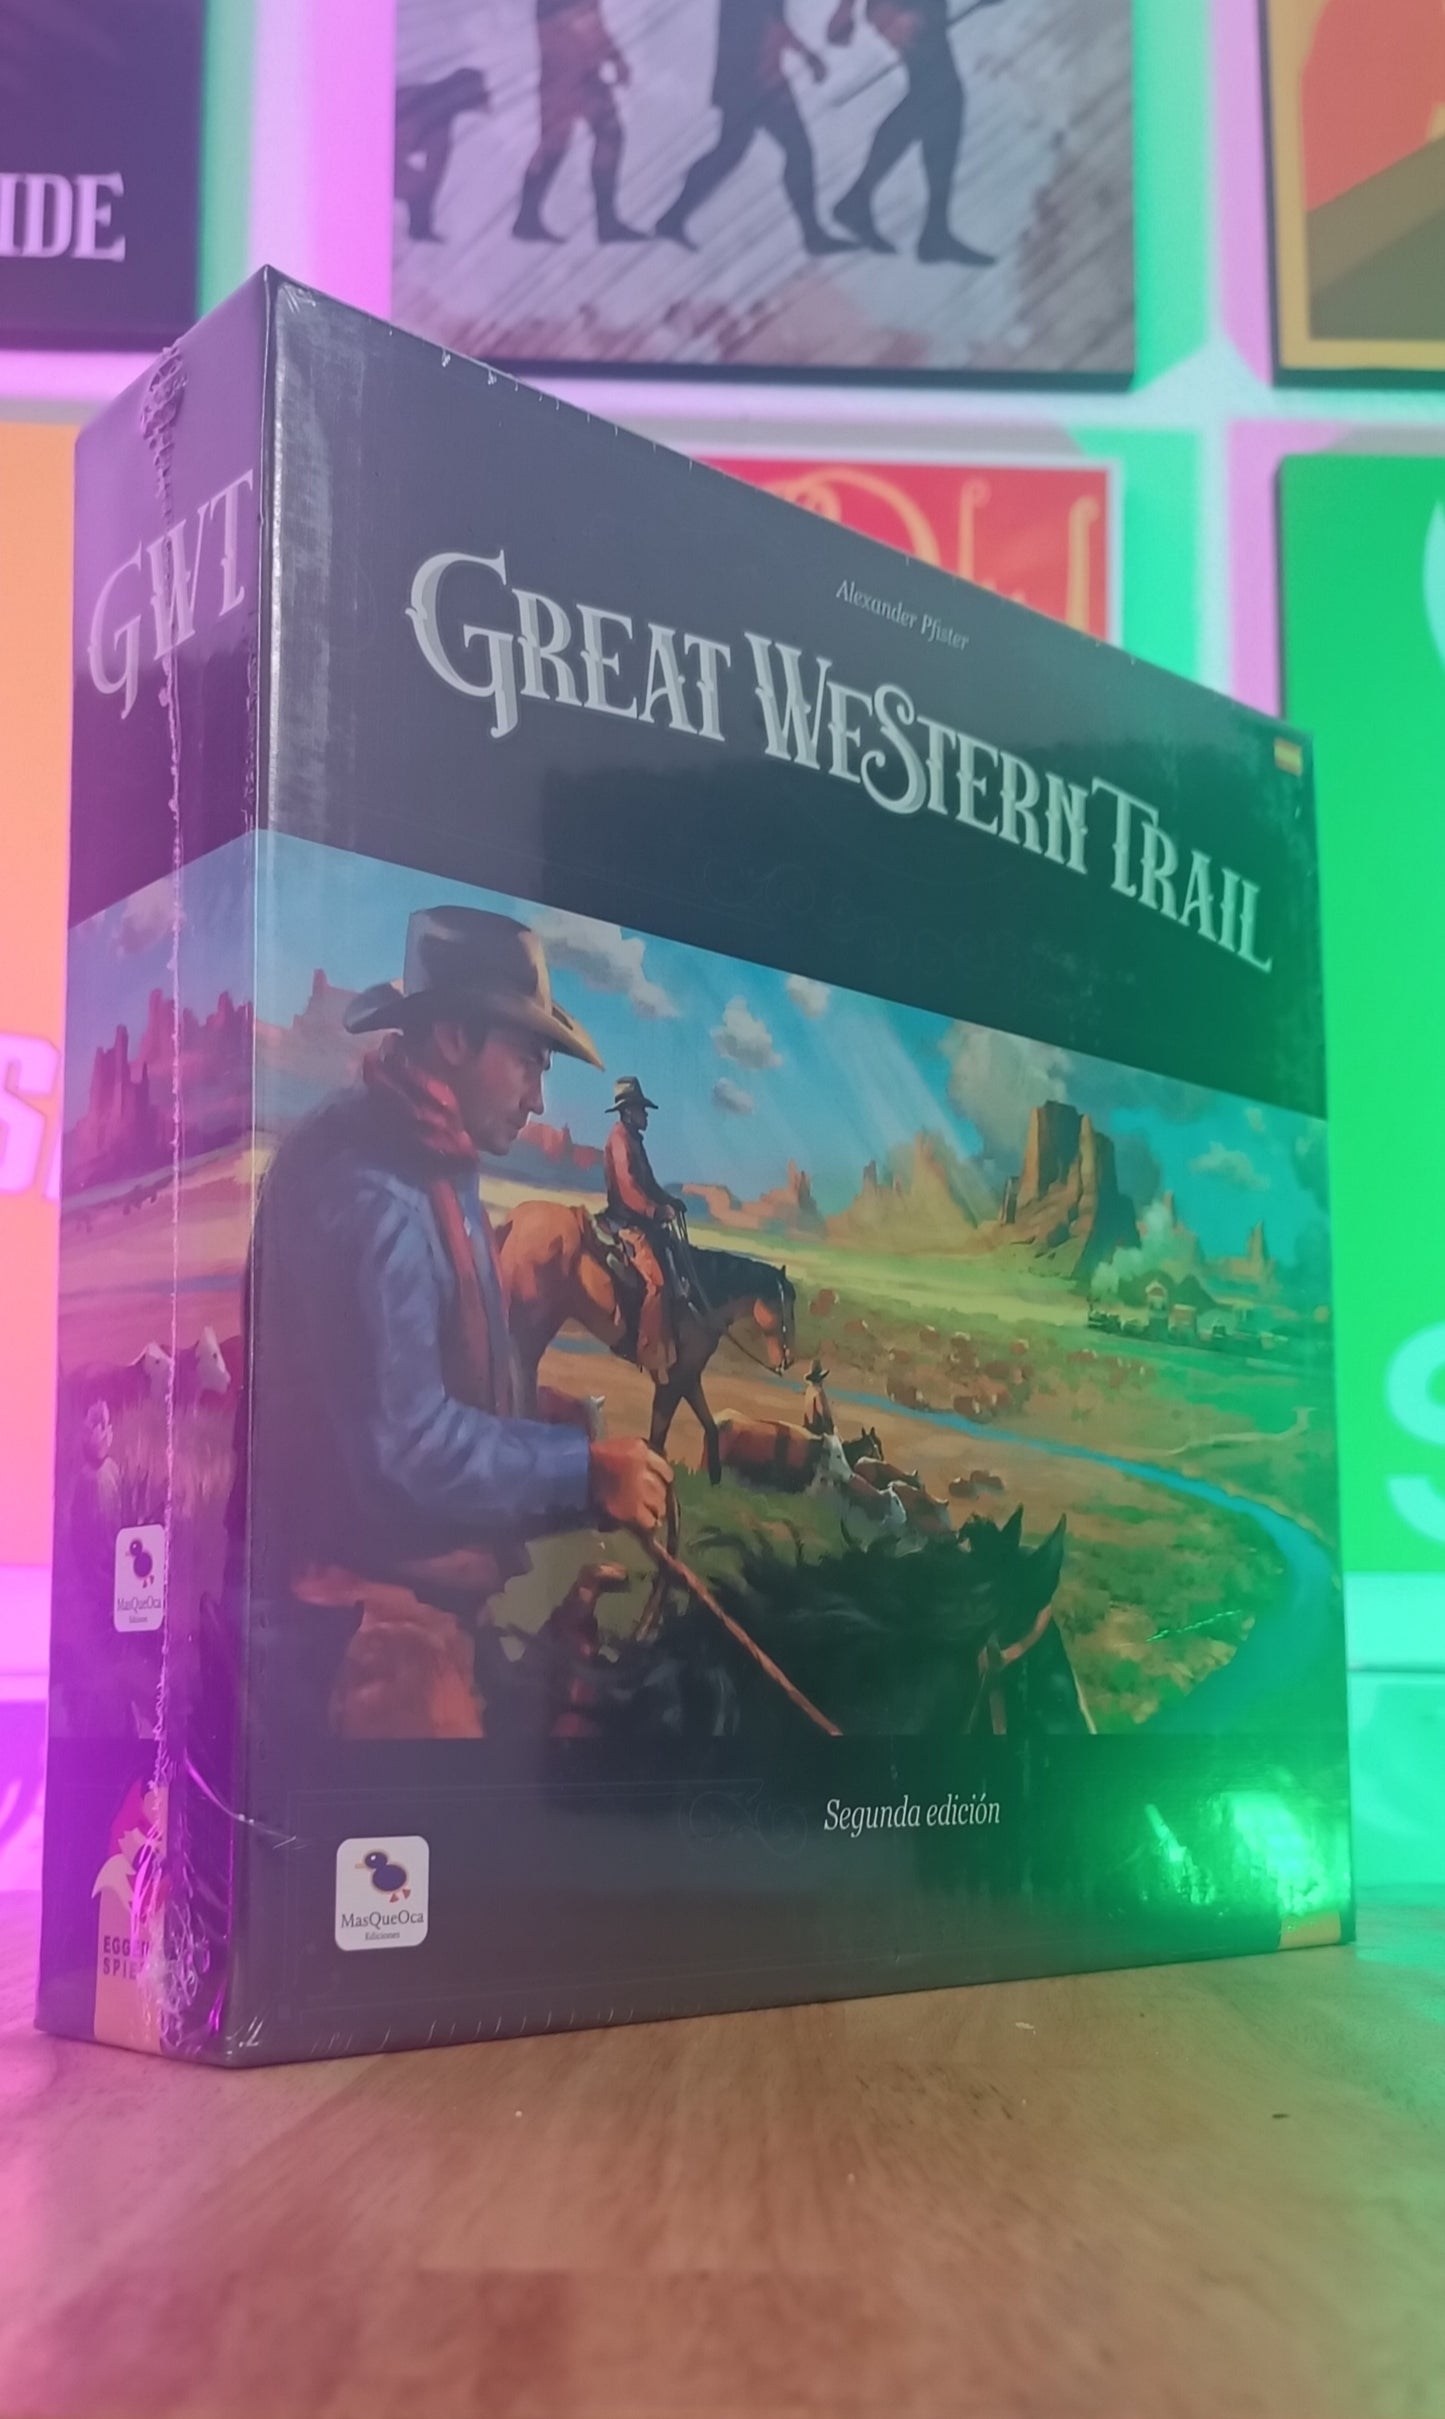 Great wester Trial 2da Edition